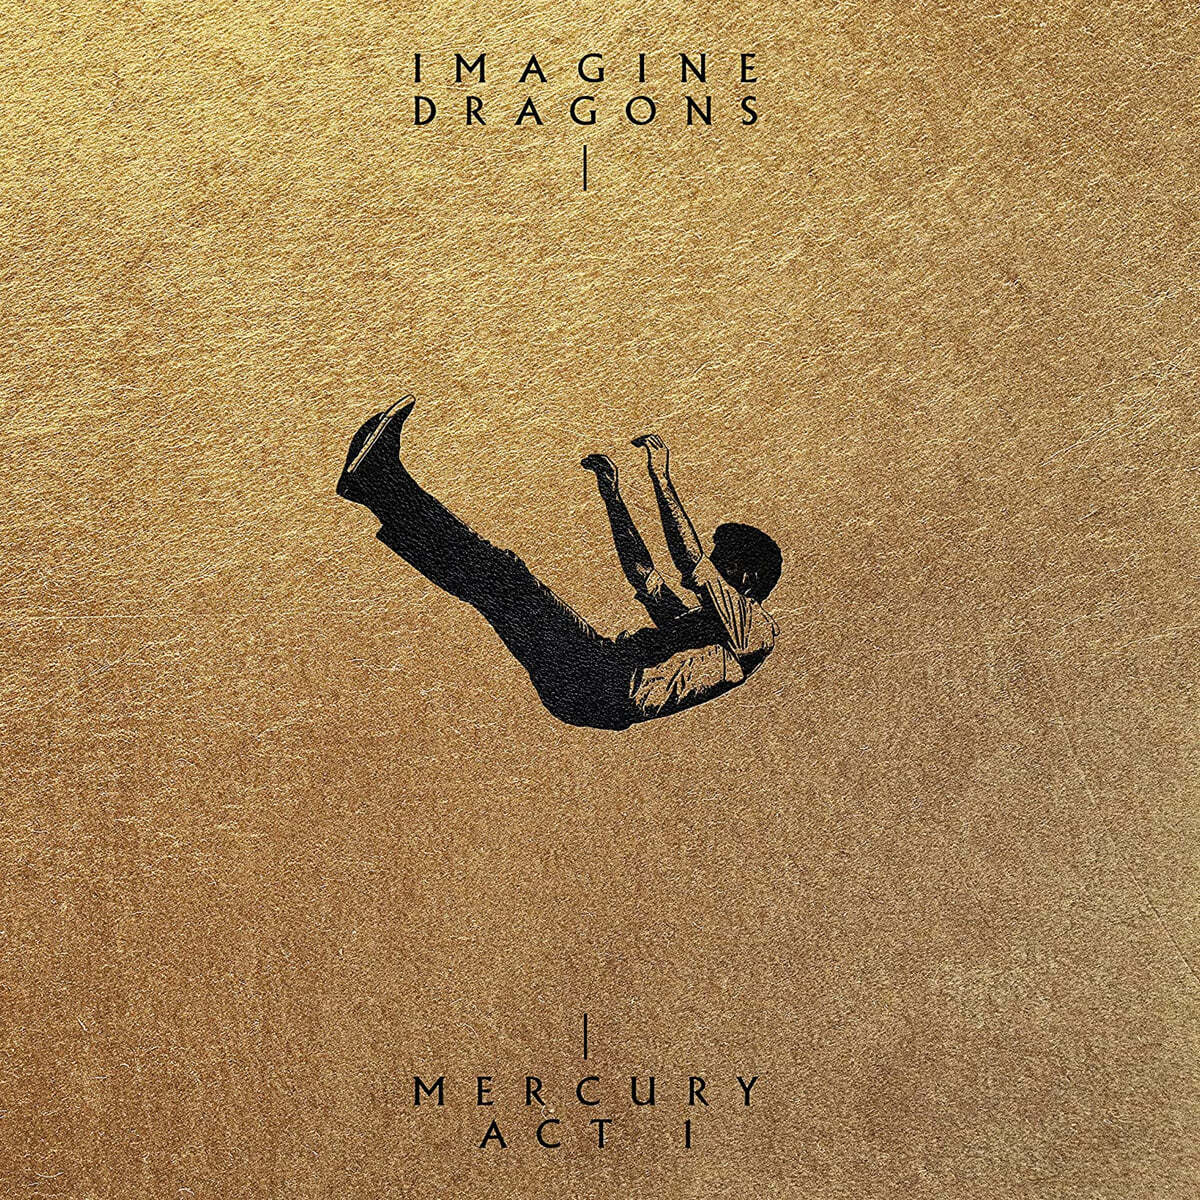 Imagine Dragons (이매진 드래곤스) - 5집 Mercury - Act 1 